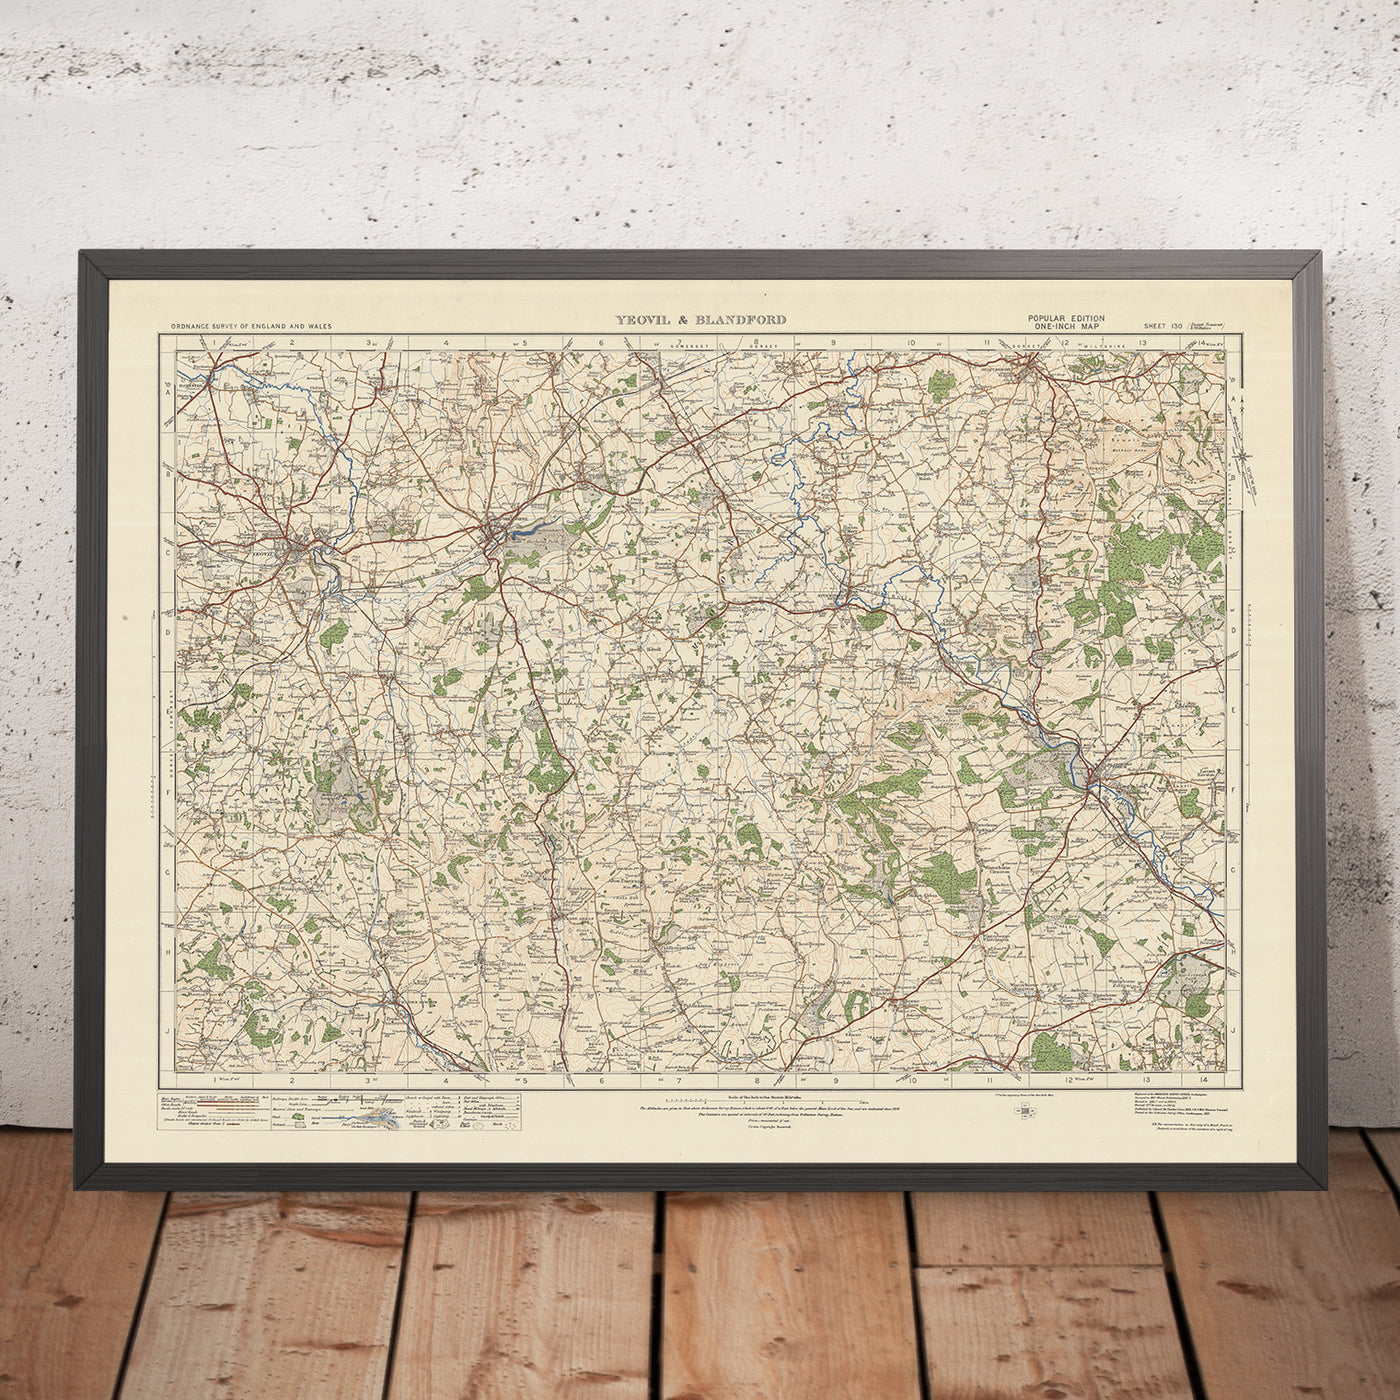 Mapa de estudio de artillería antigua, hoja 130 - Yeovil & Blandford, 1925: Sherborne, Shaftesbury, Ilchester, Maiden Newton, Dorset AONB